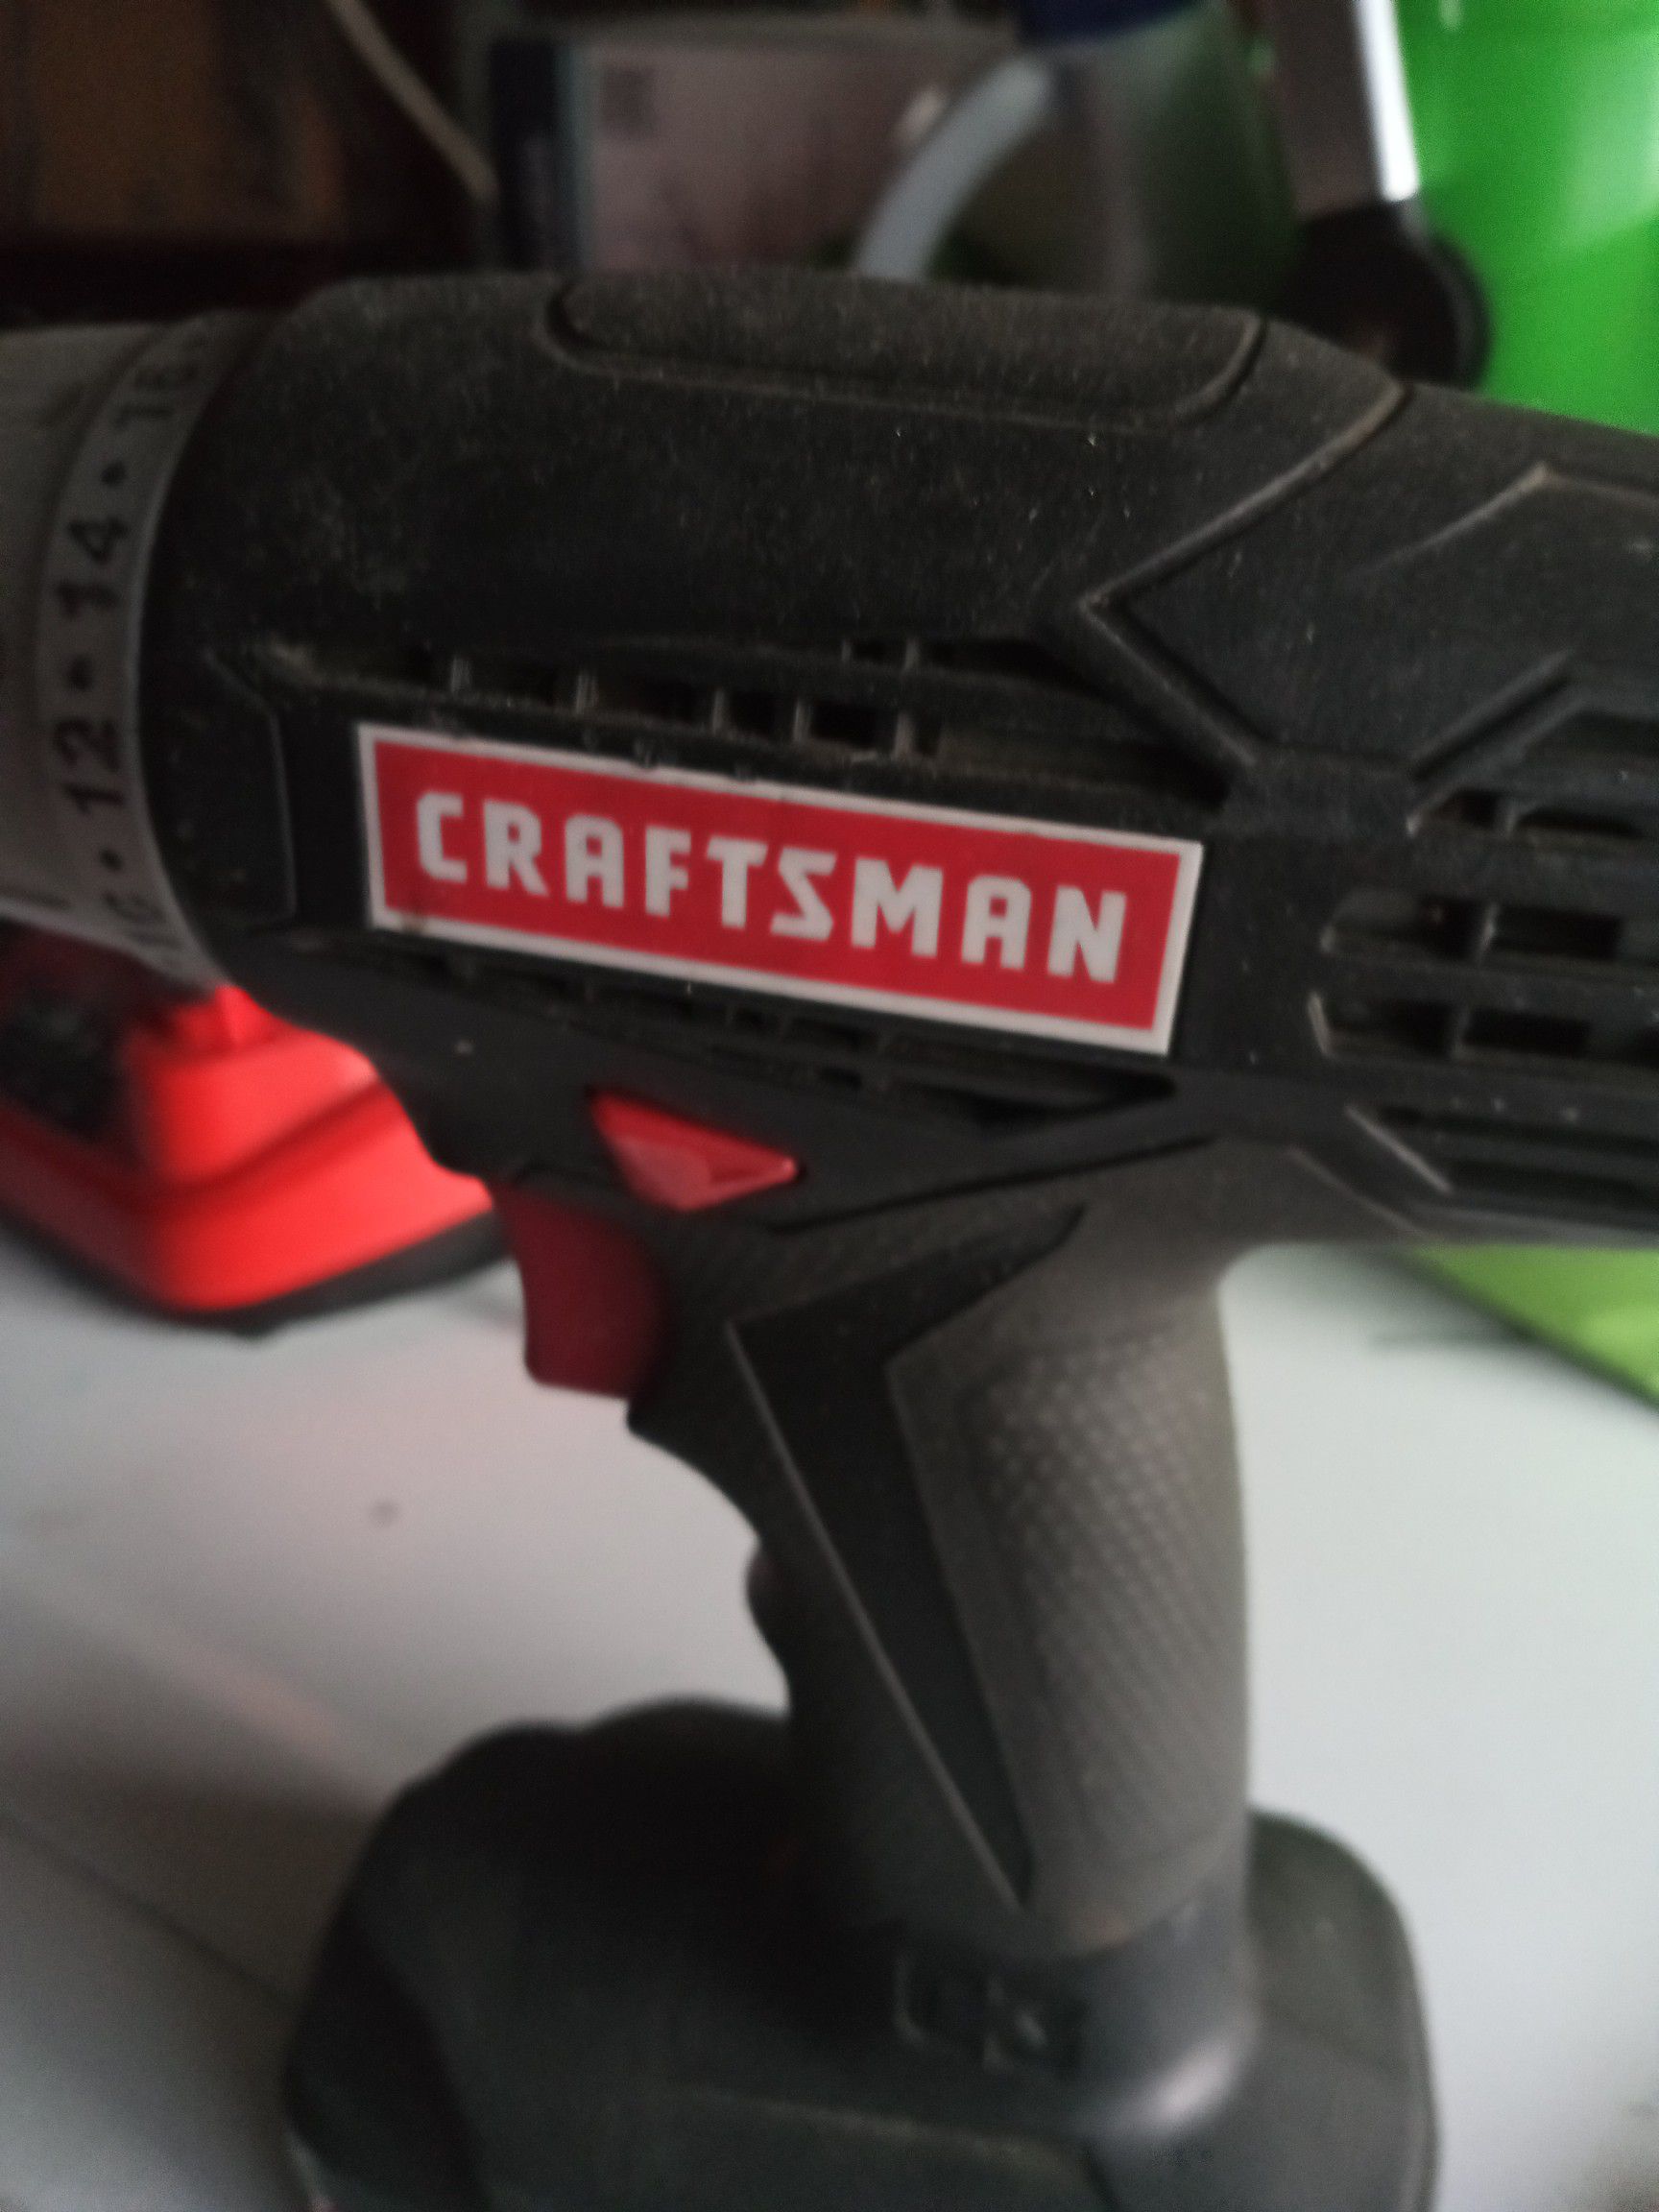 Craftsman drill 20 volt